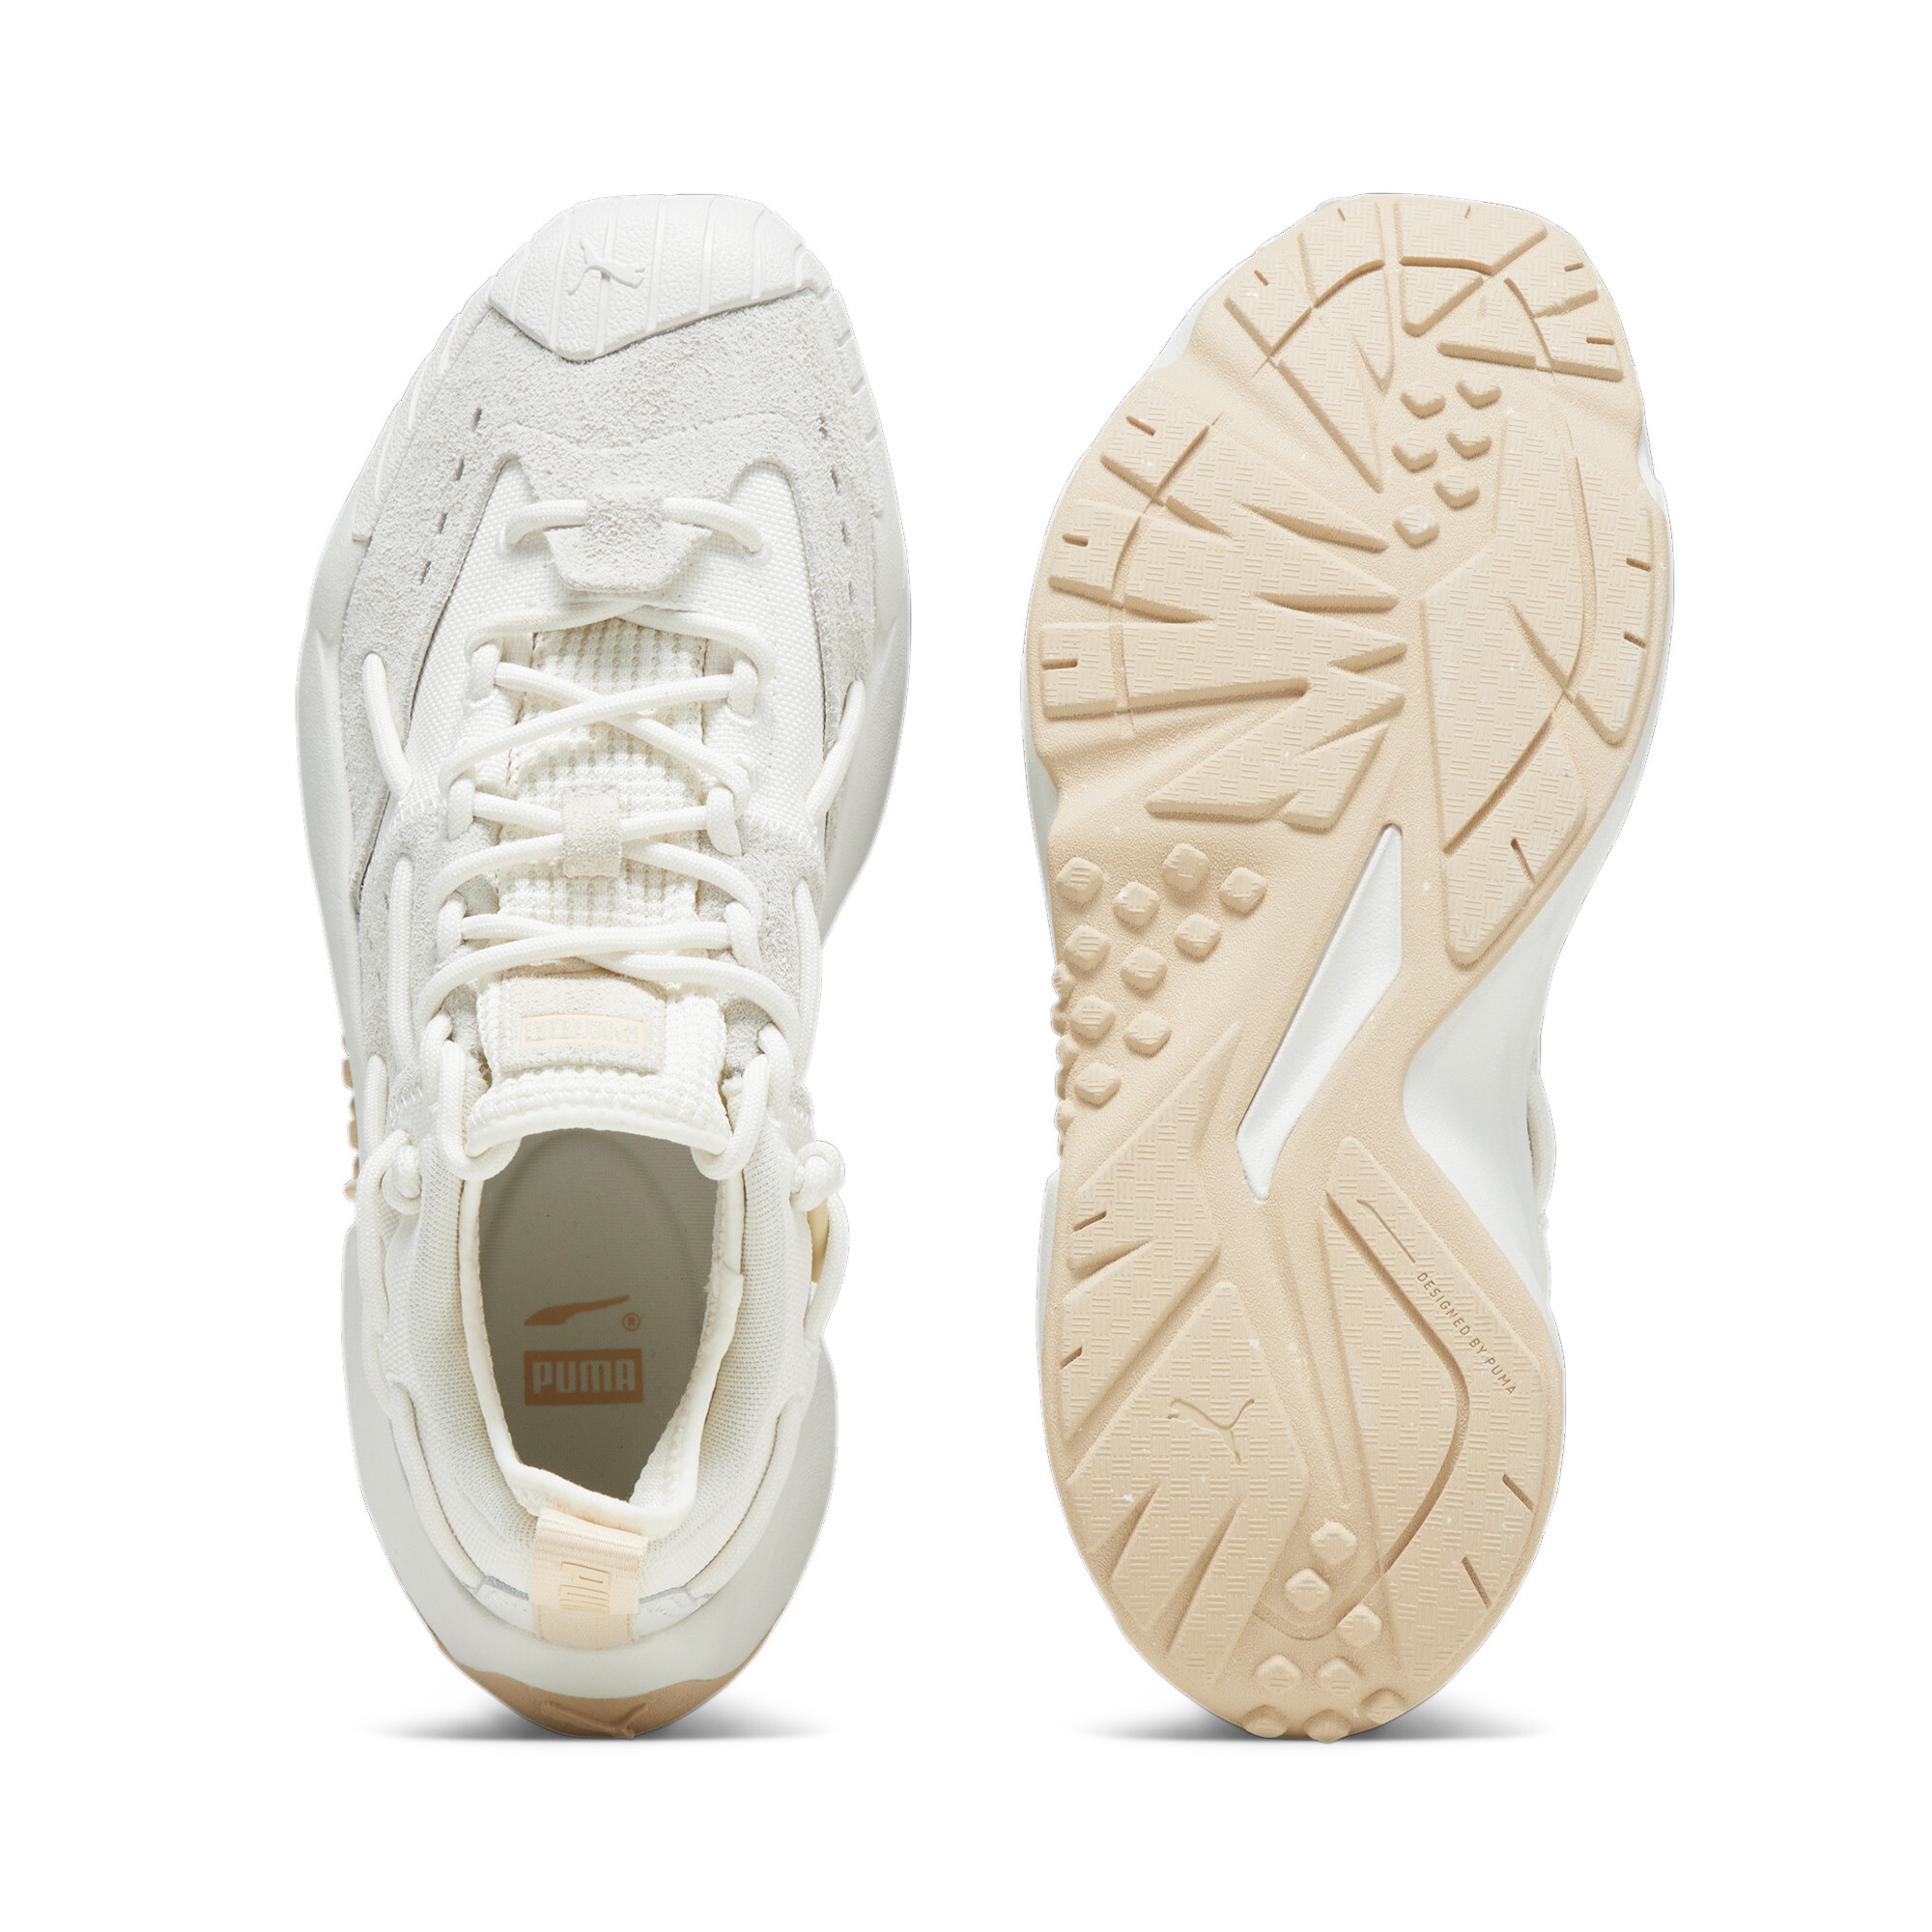 Men's PUMA Plexus Sand Sneakers In White, Size EU 40